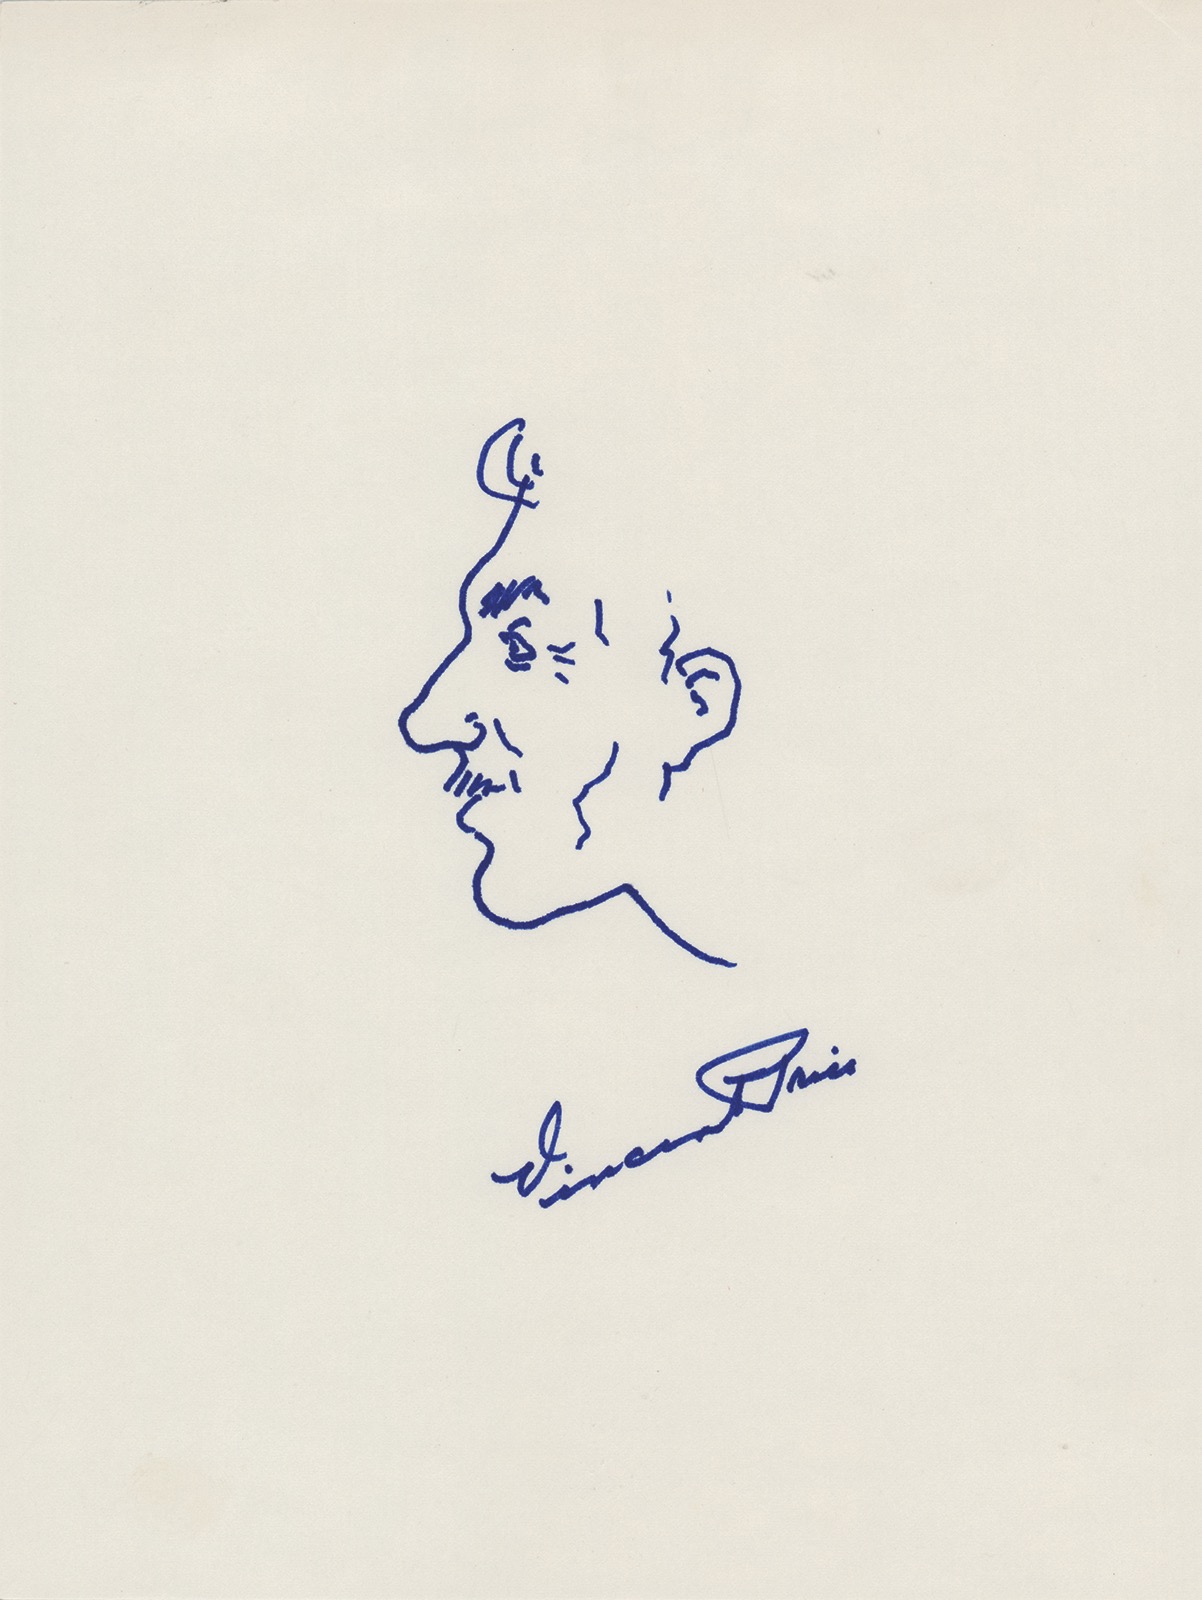 Lot #607 Vincent Price Original Self-Portrait Sketch - Image 1